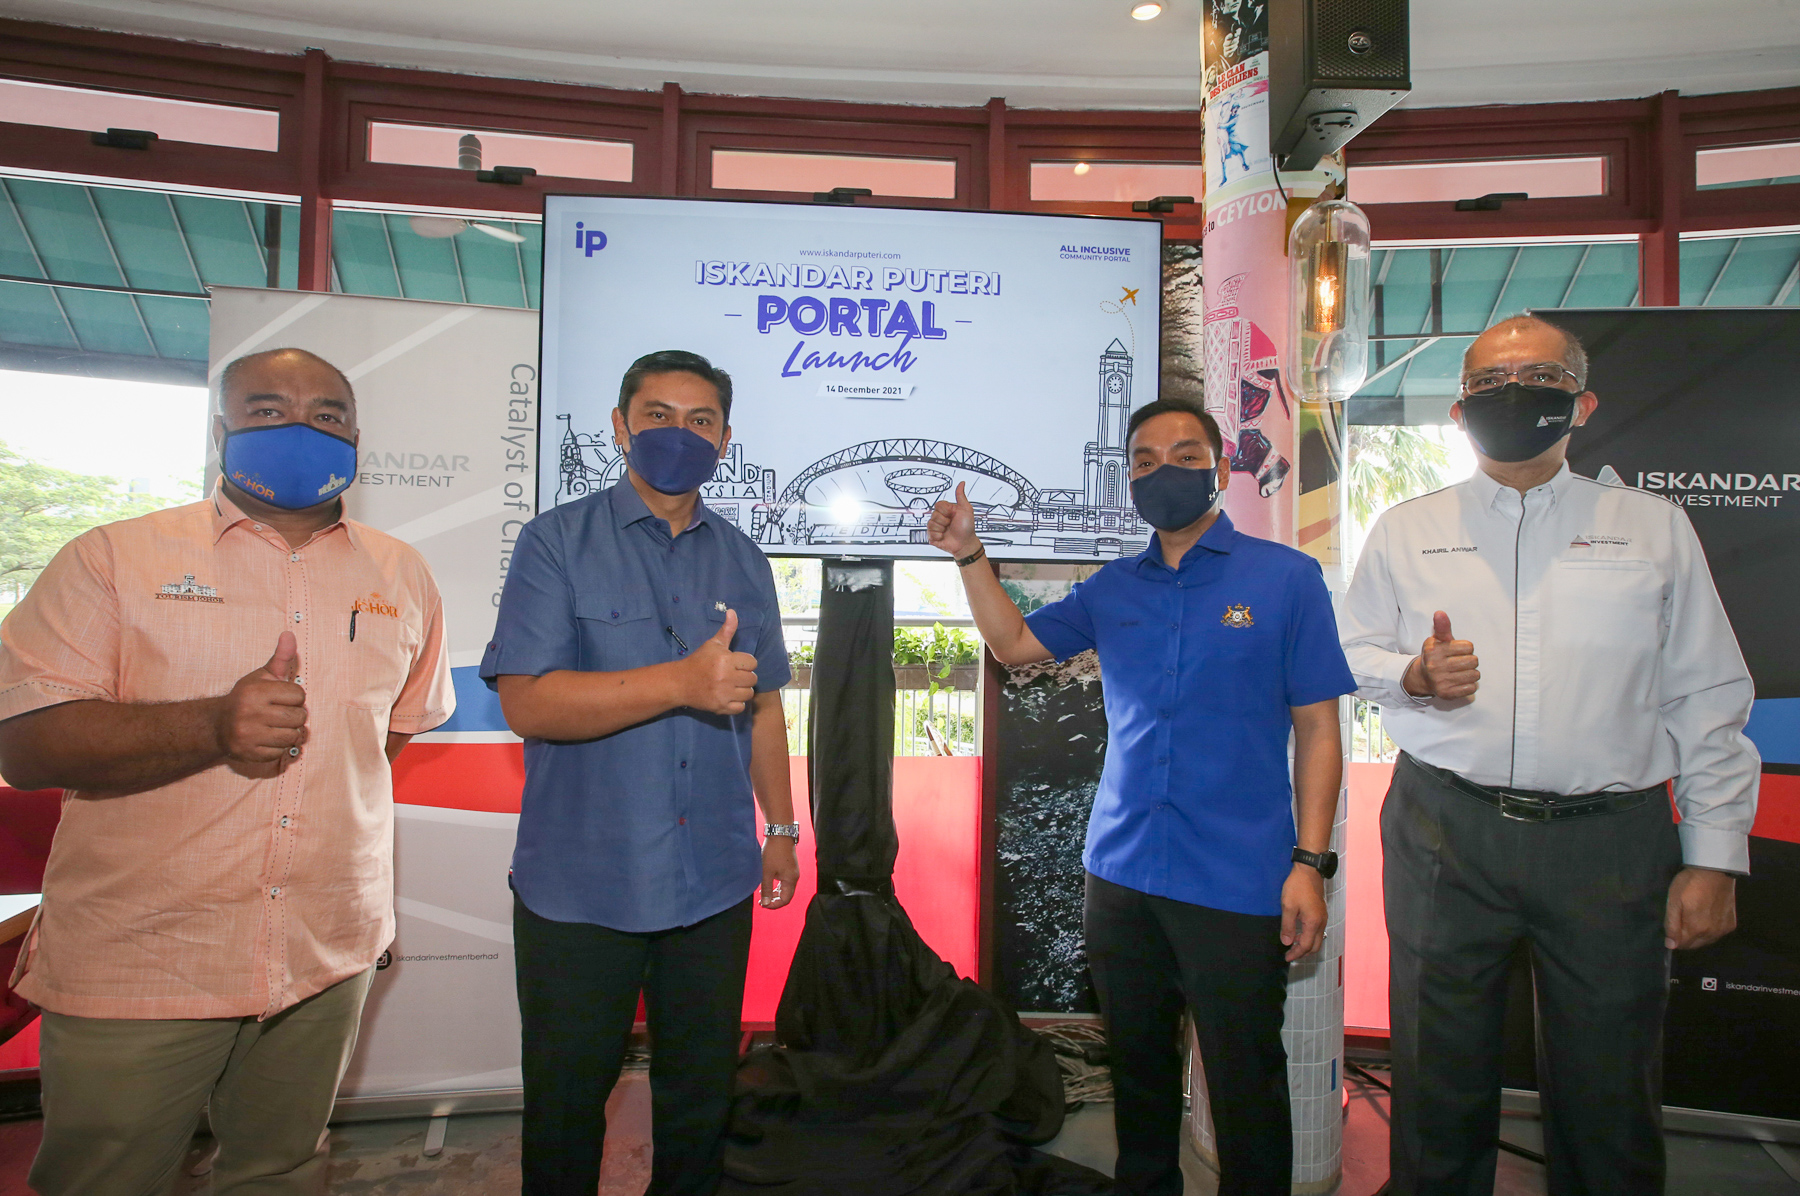 IIB Launched a Community Portal, Aims to be Iskandar Puteri's One-Stop Digital Platform